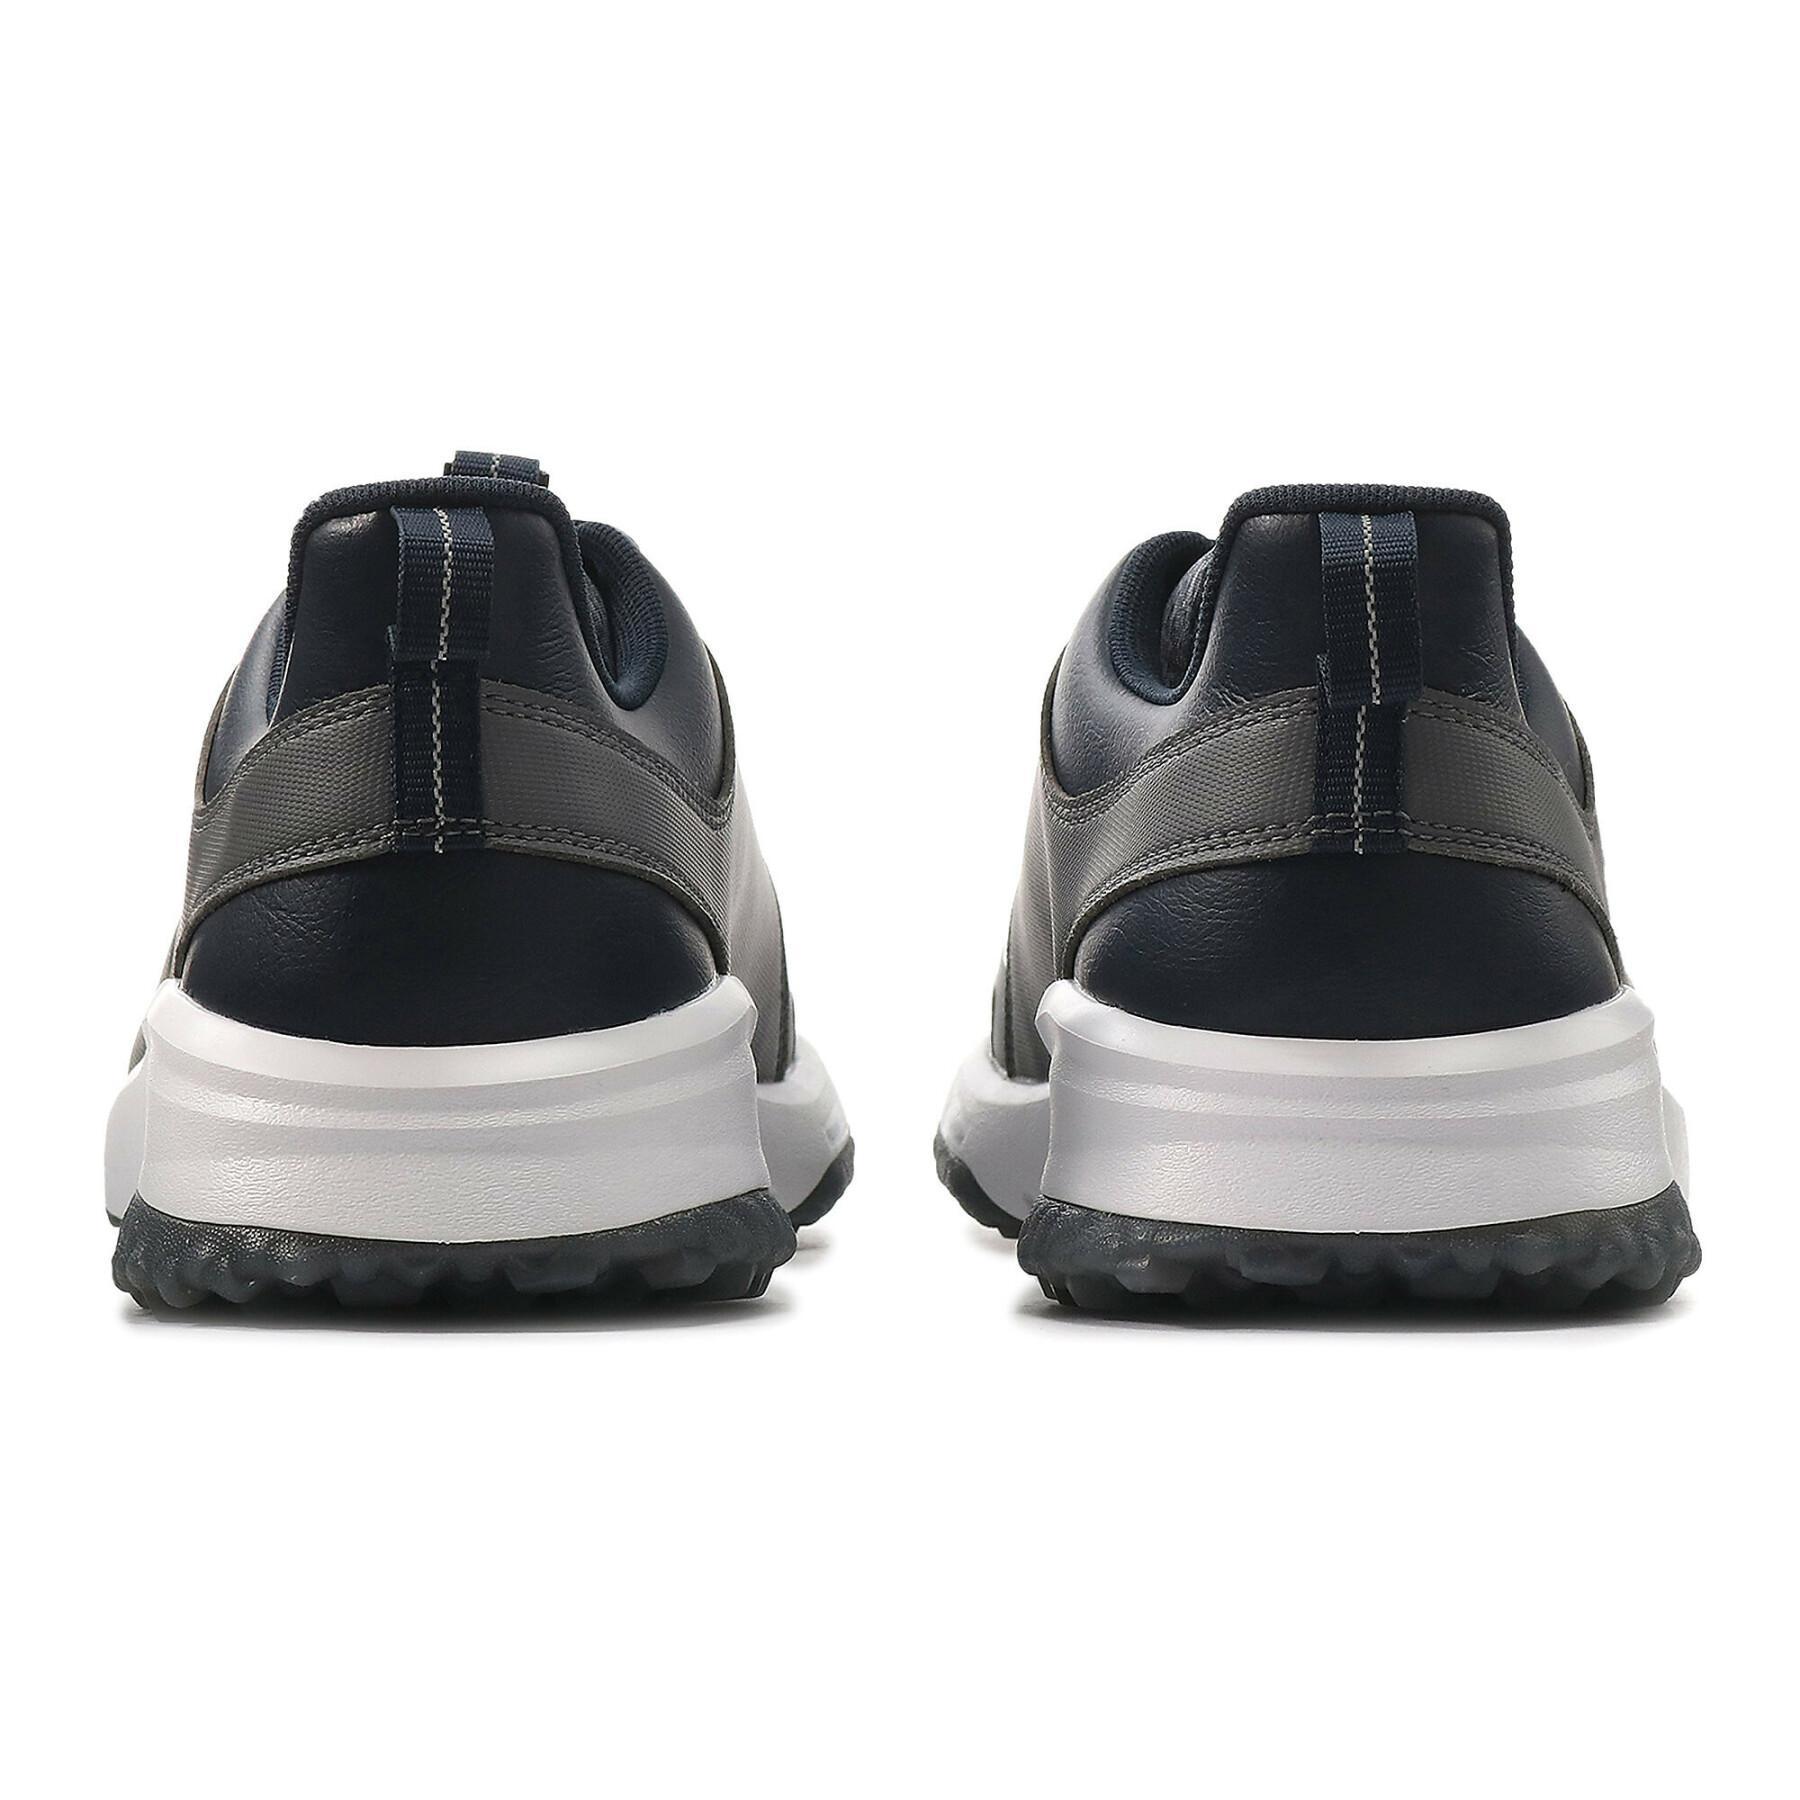 Sapatos Puma Grip Fusion Pro 3.0